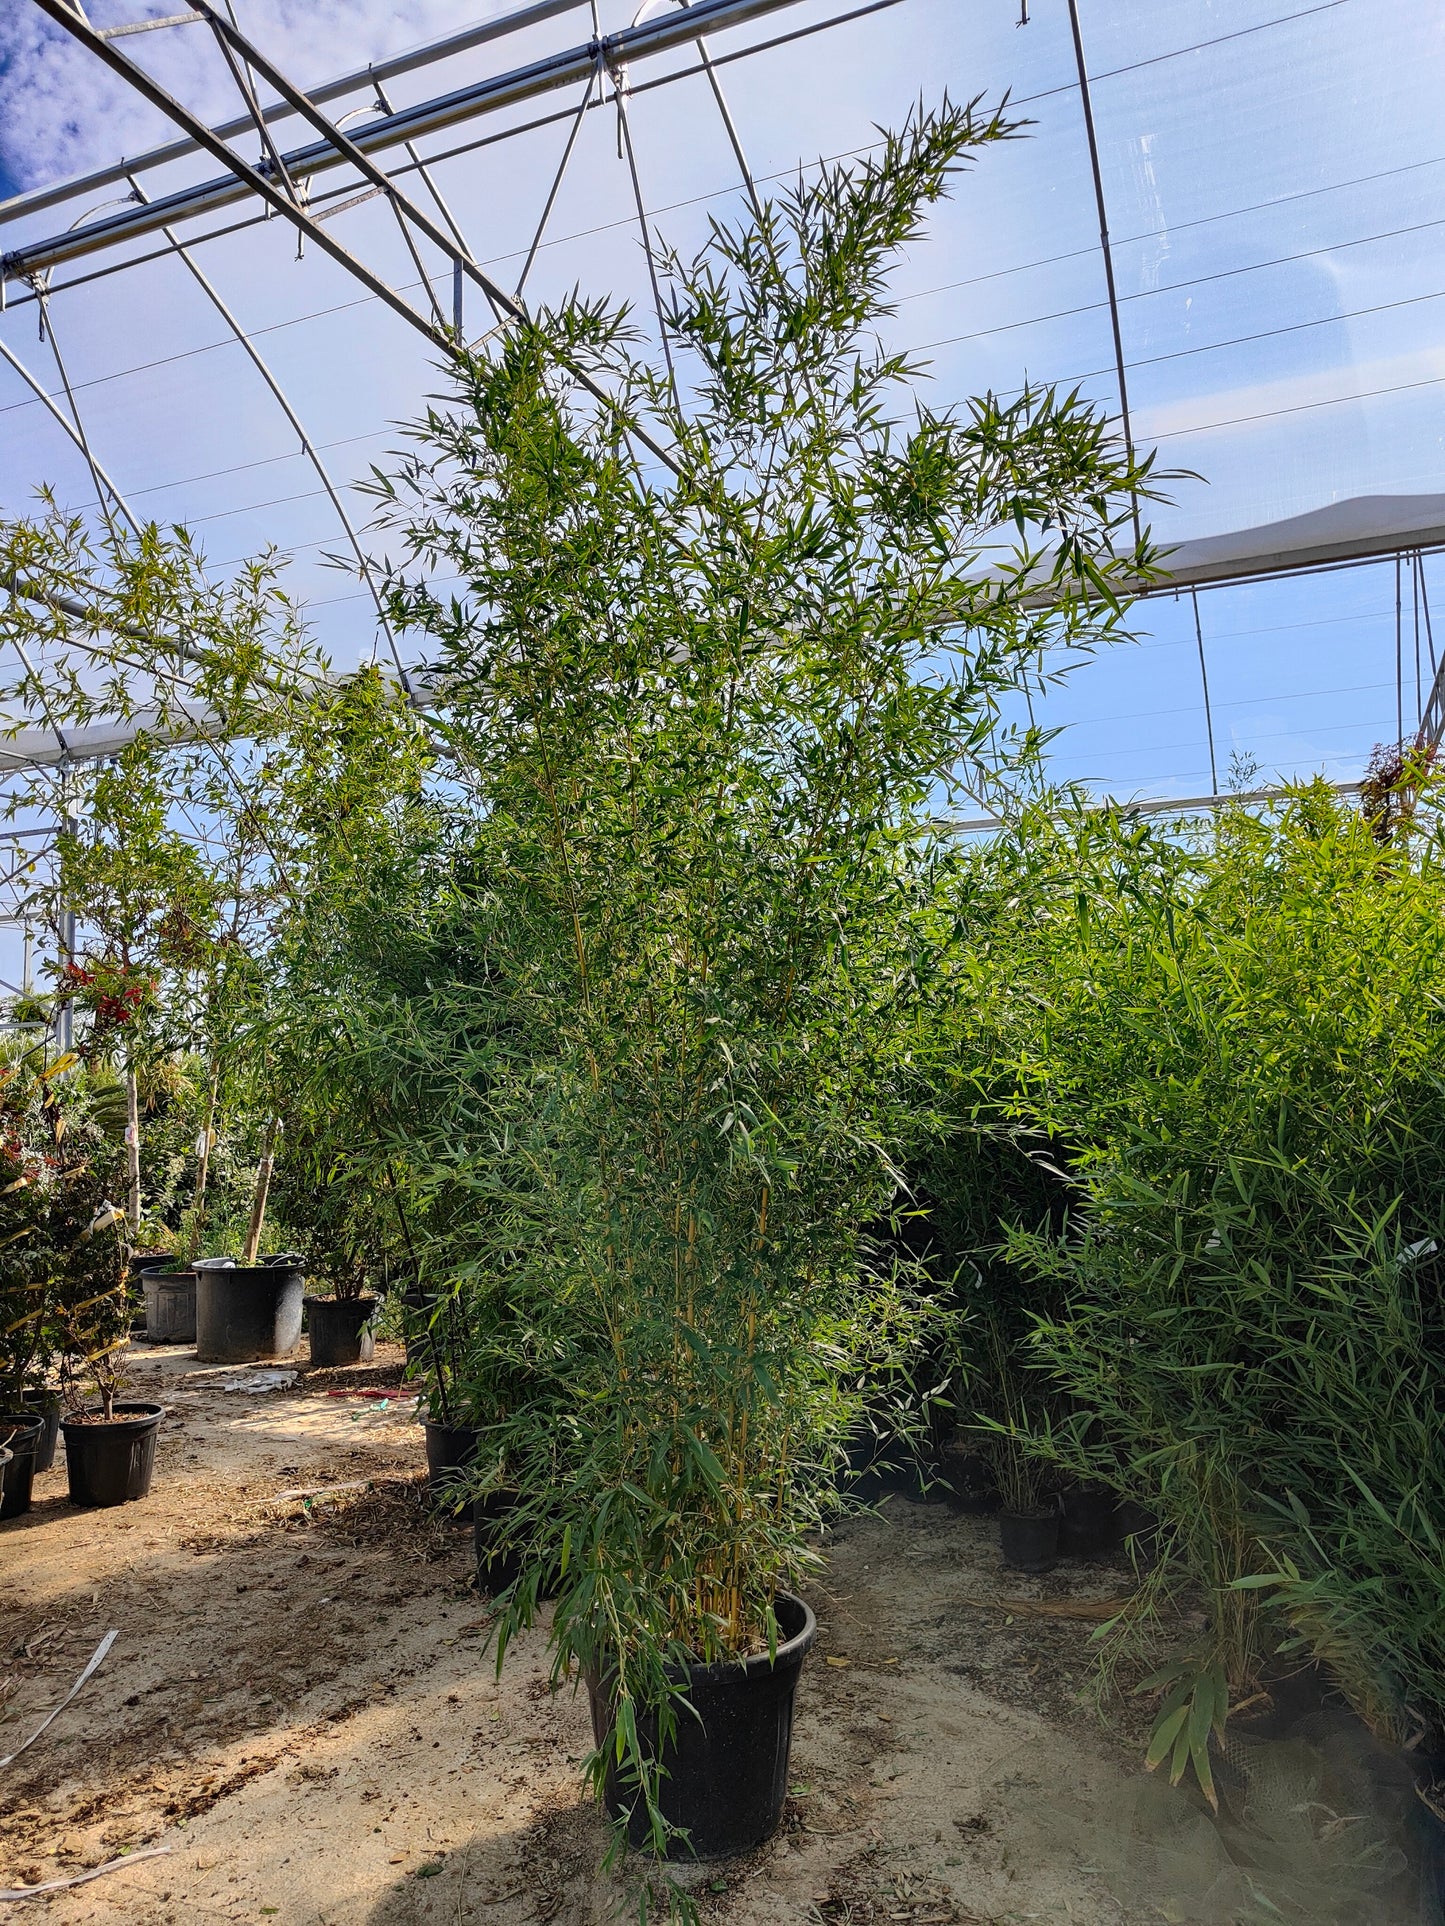 Bambou (Phyllostachys) Aurea